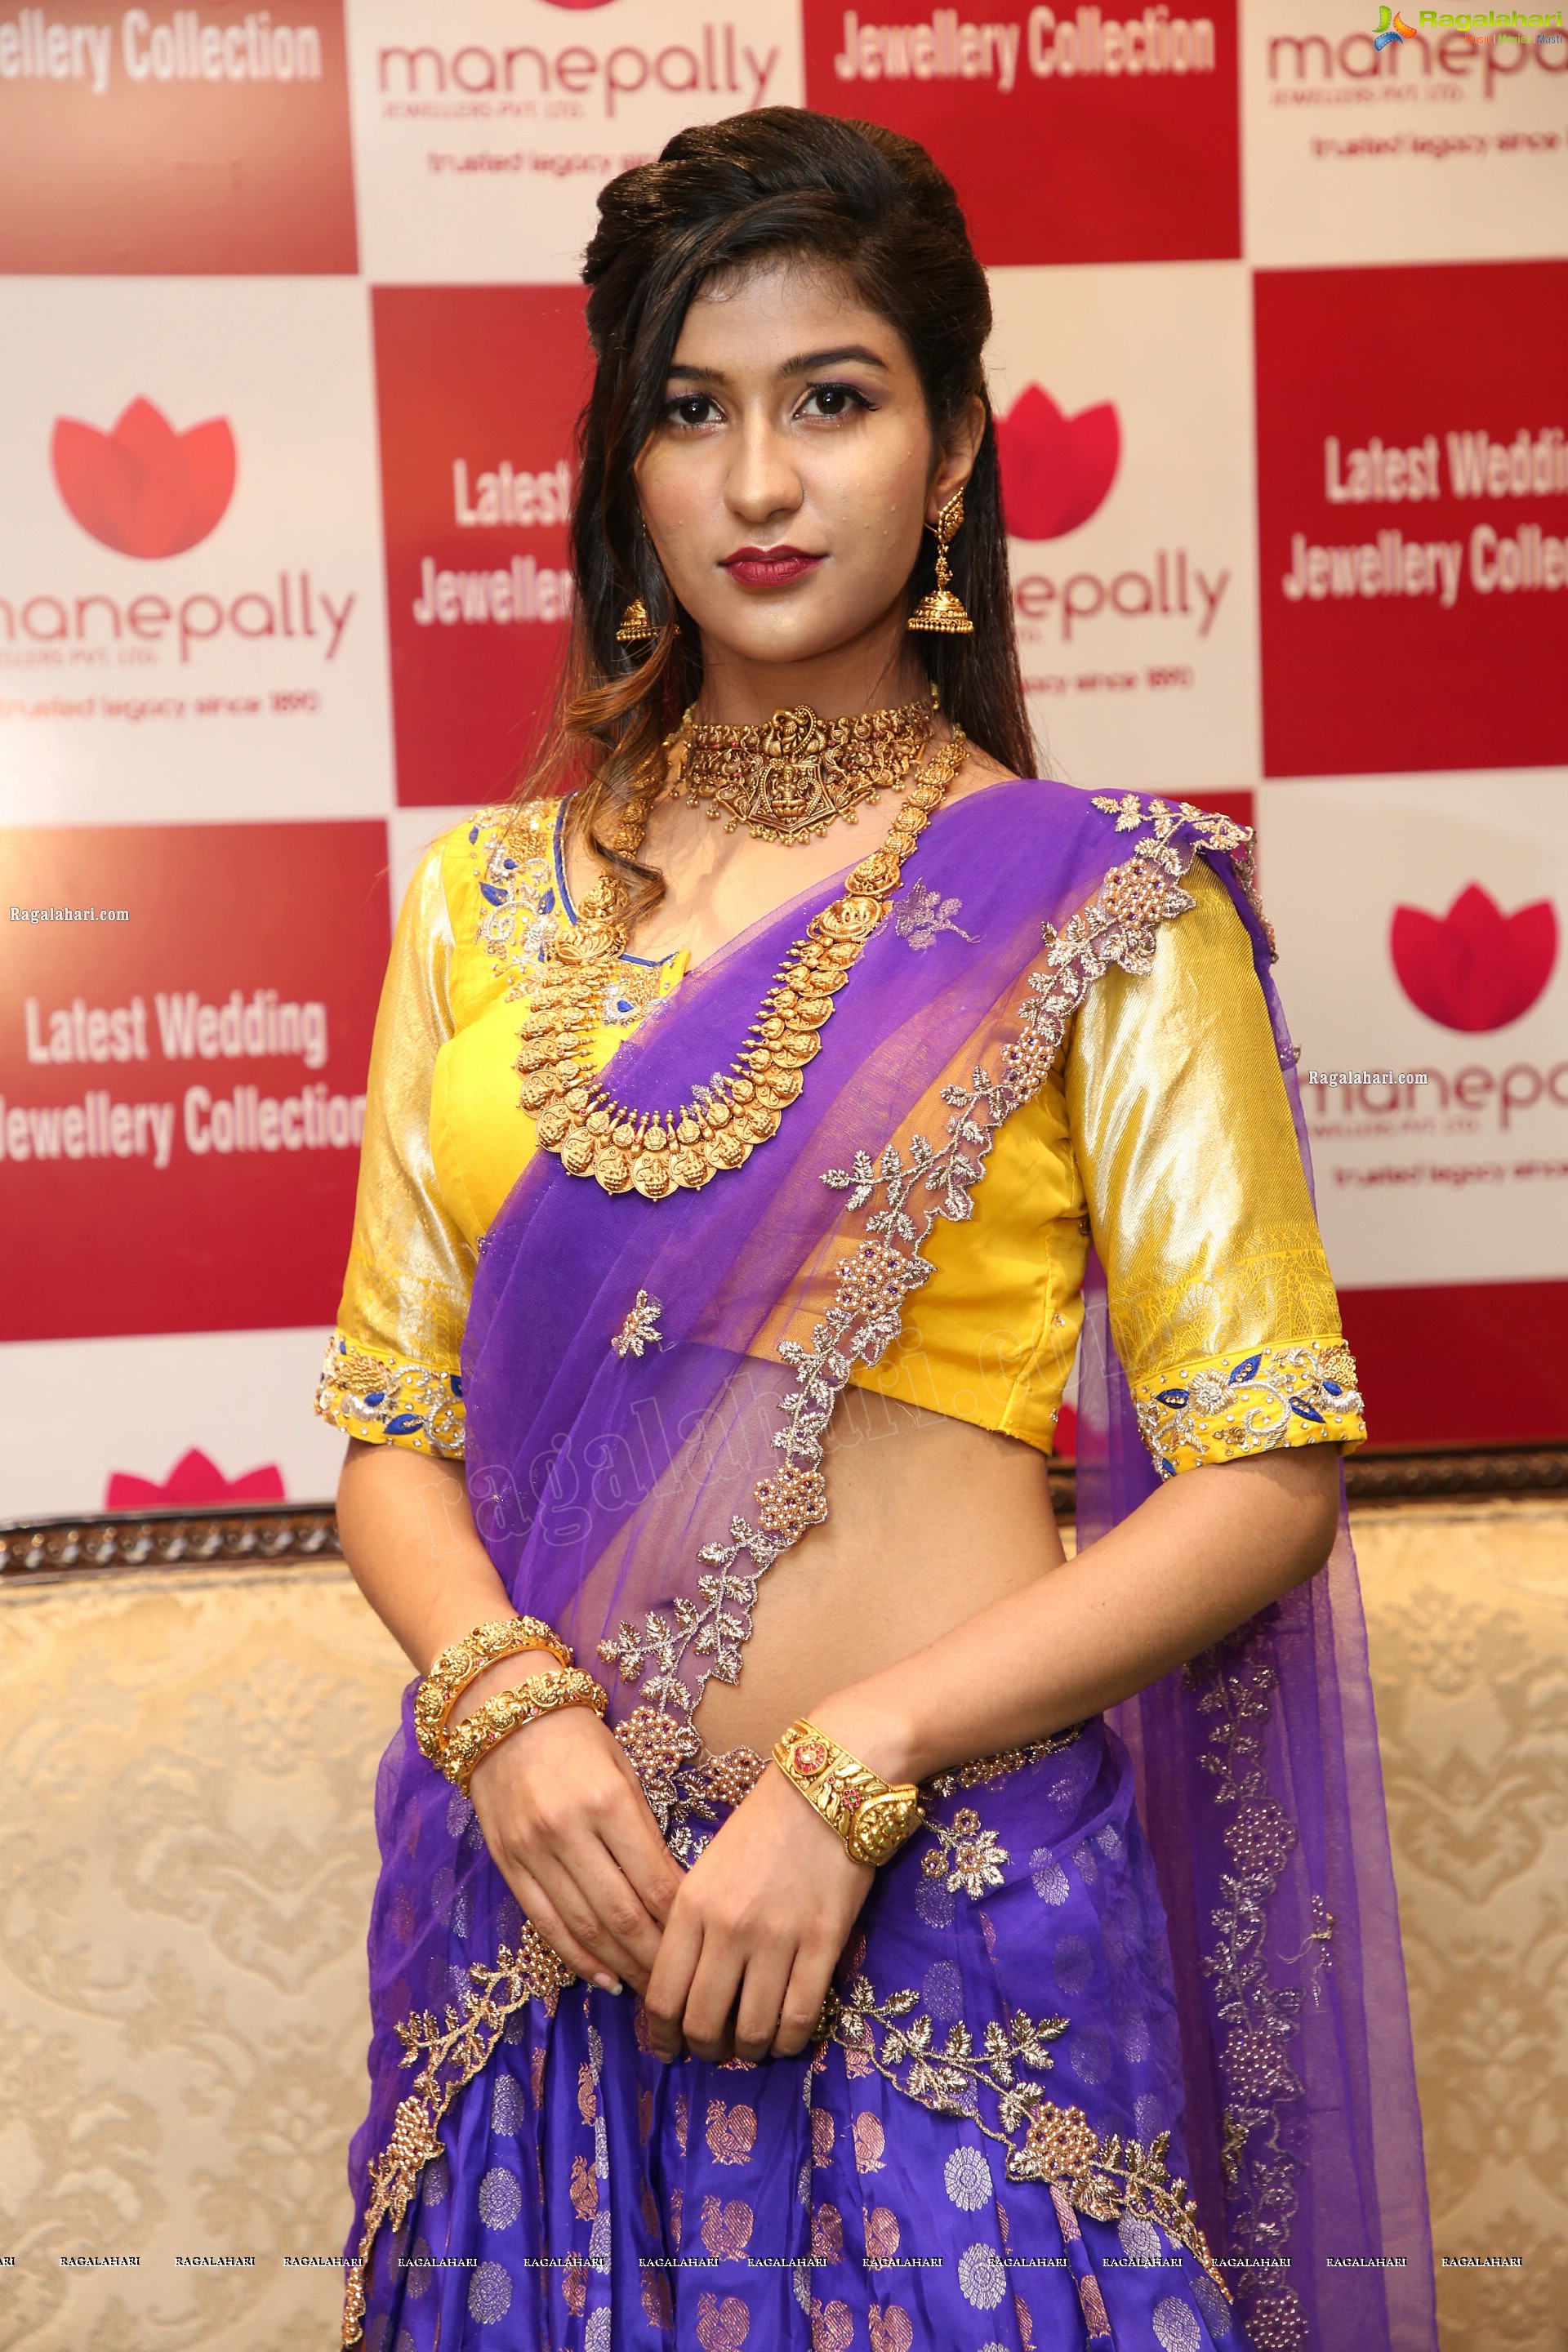 Manepally Jewellers Exclusive Wedding and Navratri Jewellery Collection 2021 Launch, Panjagutta